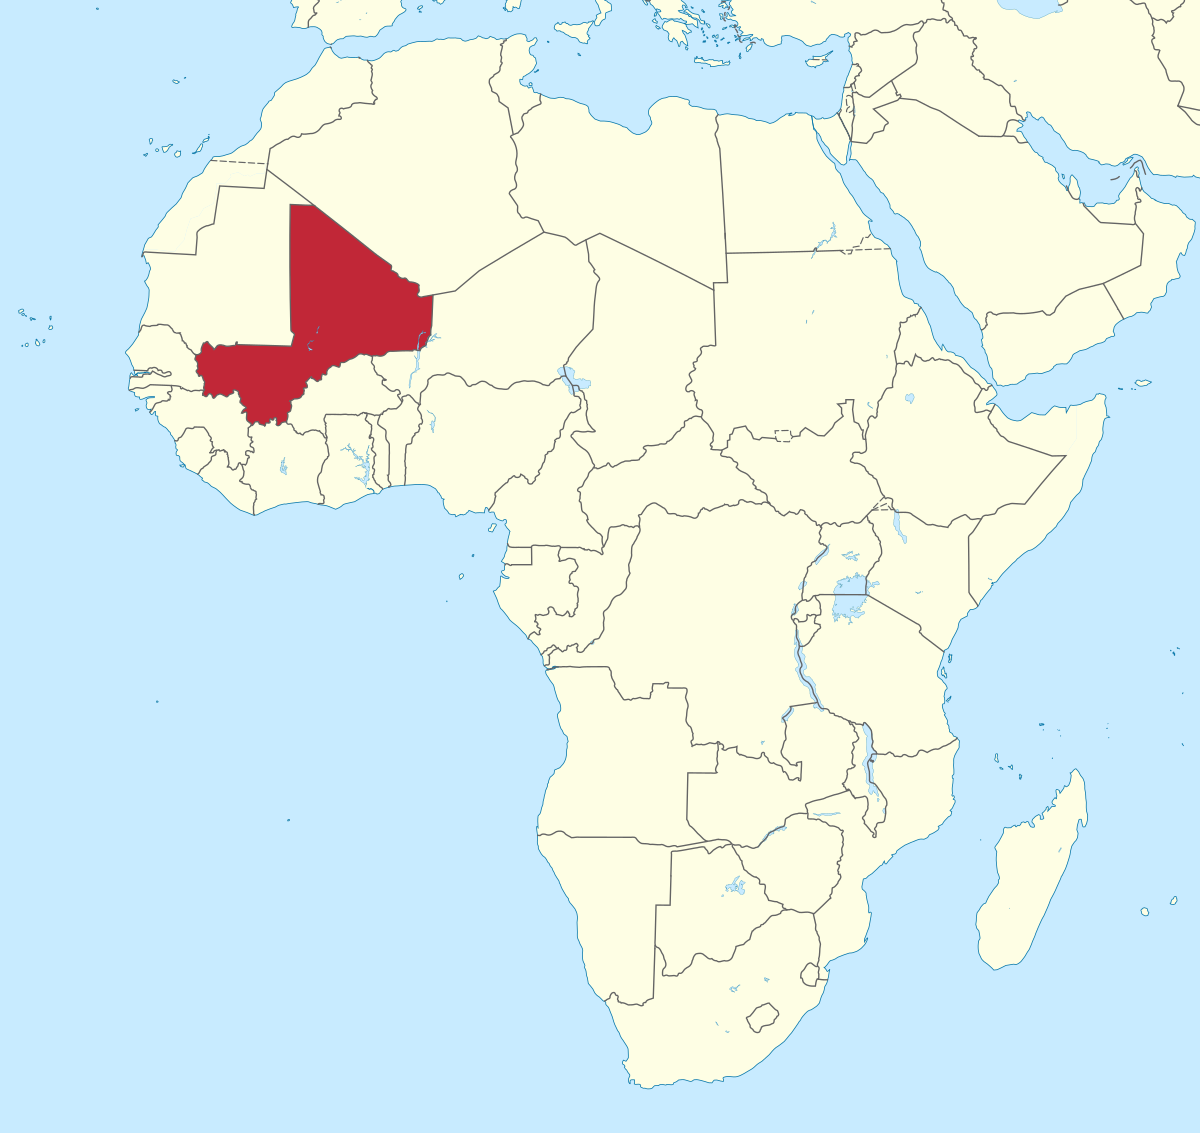 Mali Map In Africa File:Mali in Africa ( mini map  rivers).svg   Wikimedia Commons